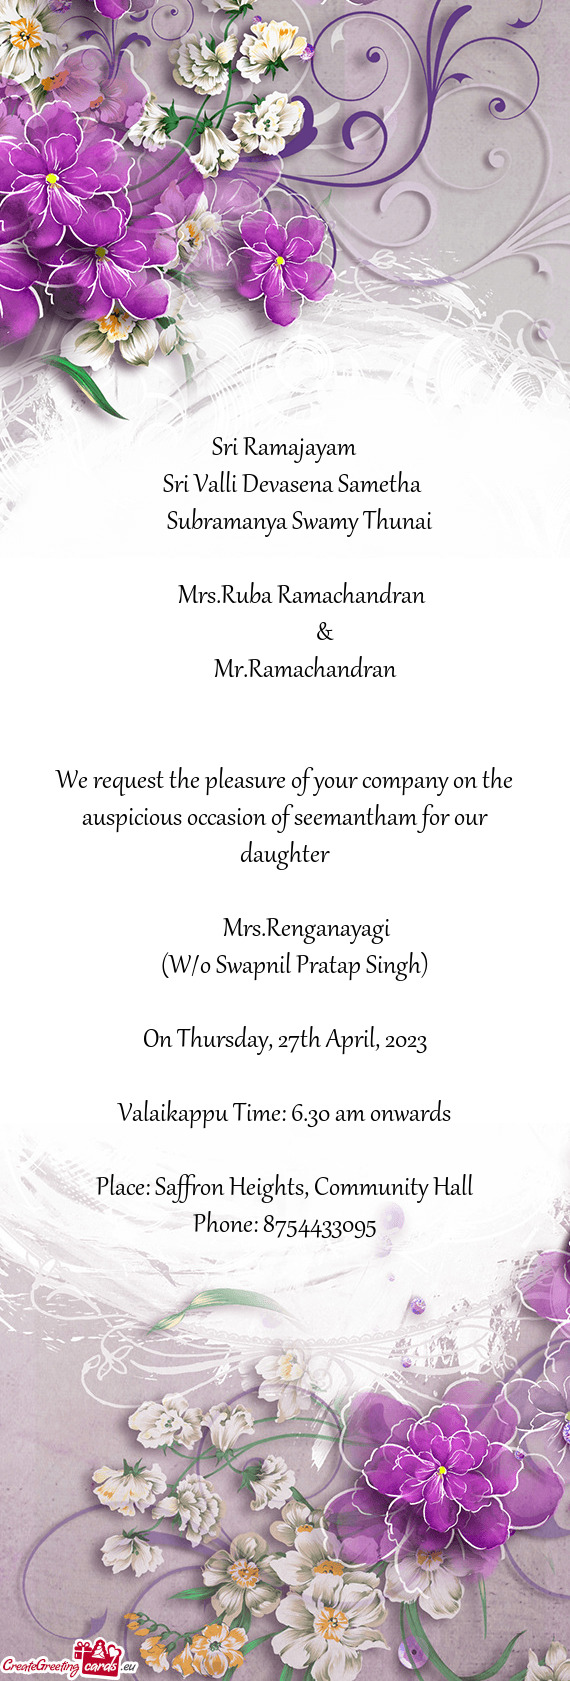 Mr.Ramachandran